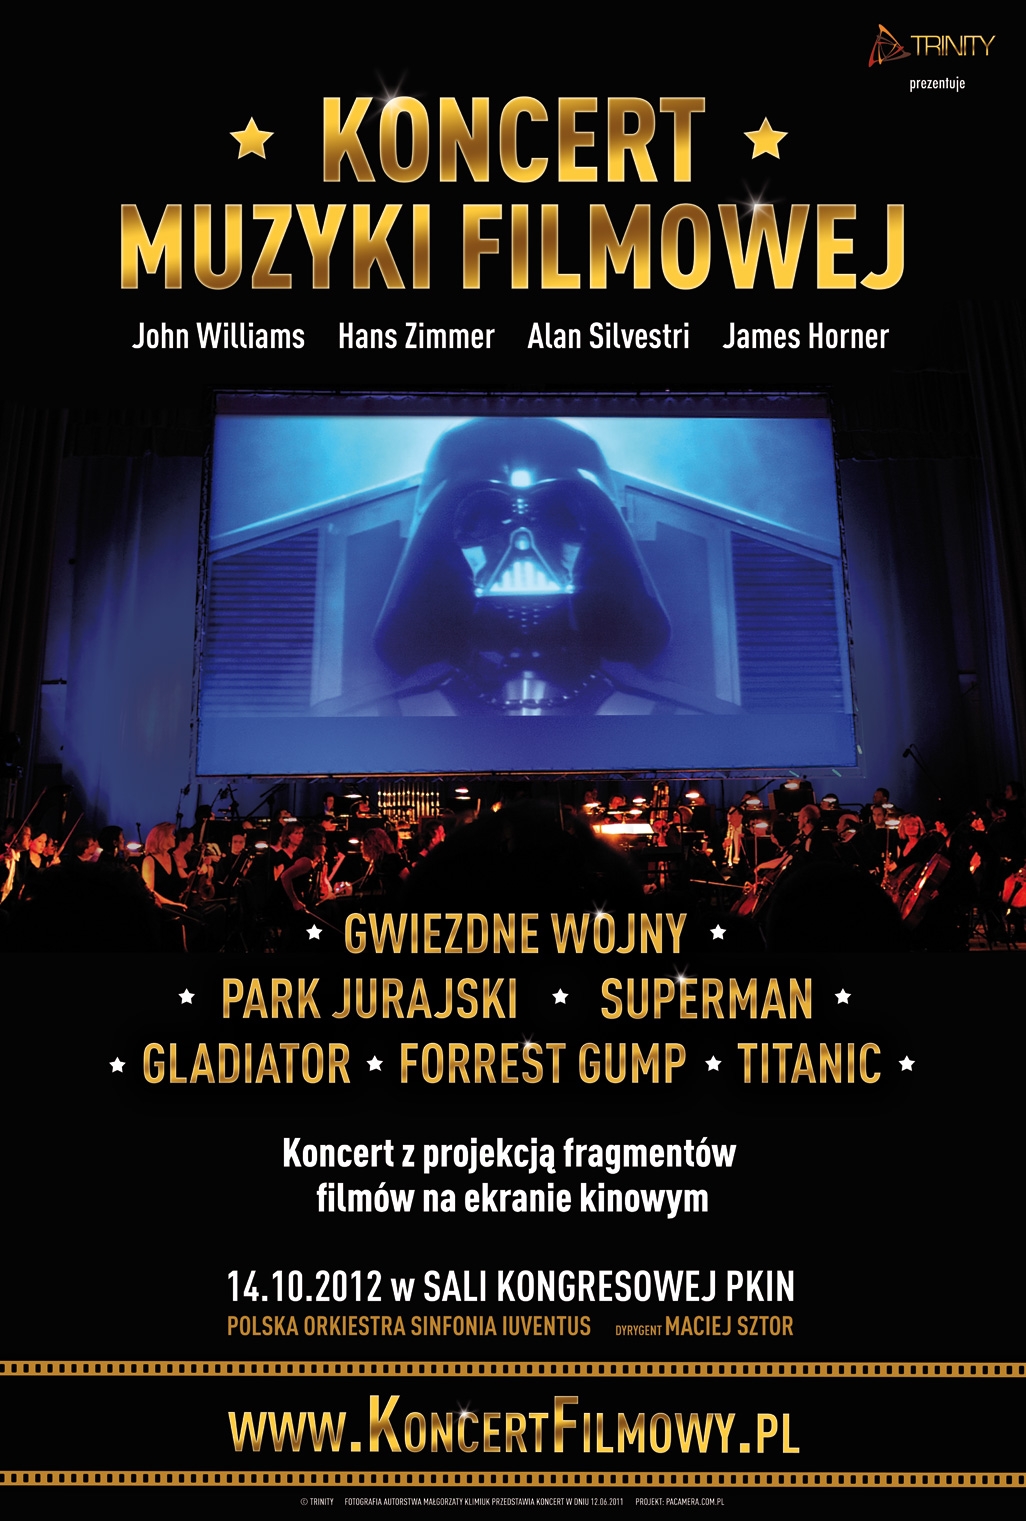 http://www.sinfoniaiuventus.pl/public/upload/plakaty/KMF_2012.JPG